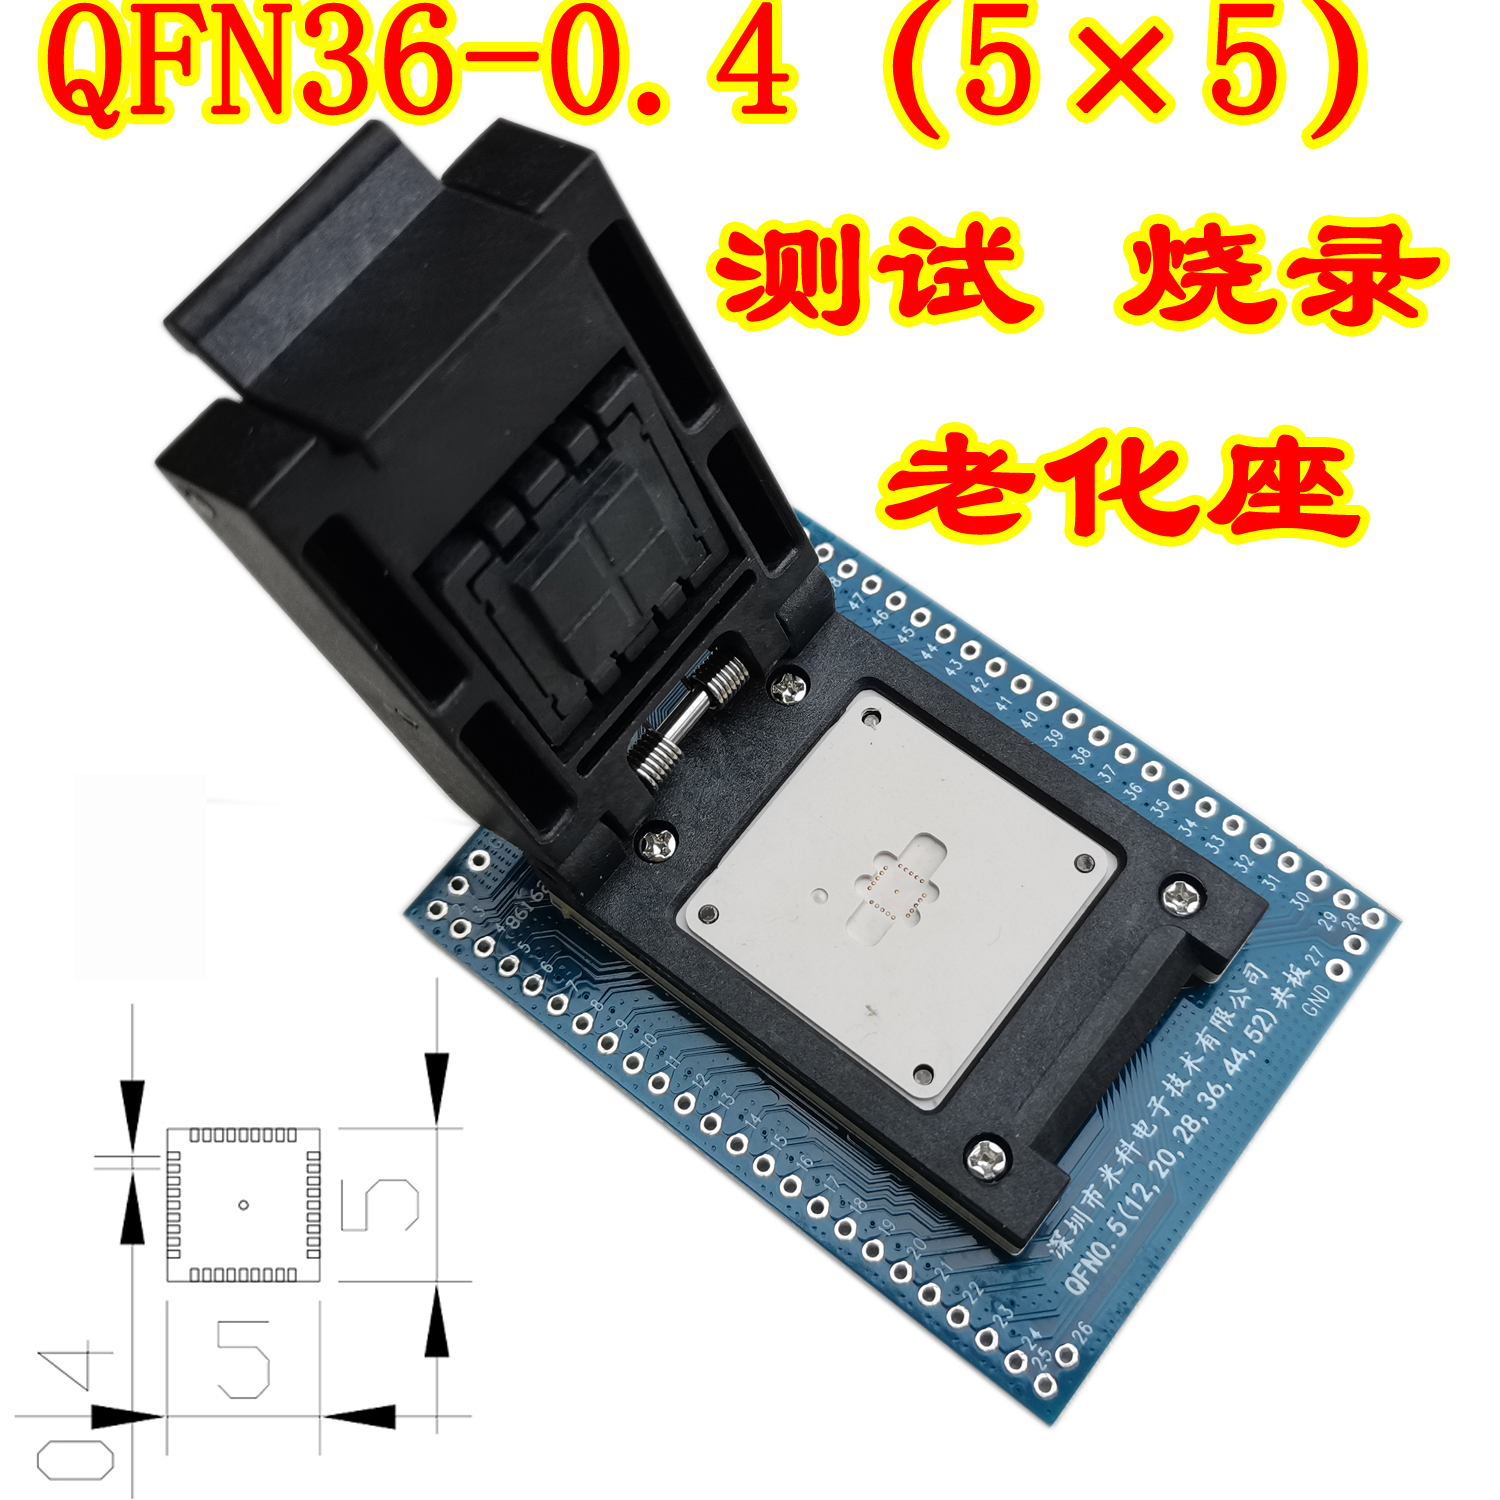 QFN36-0.4烧录座 qfn36测试座 探针编程器转接座 老化座连接器